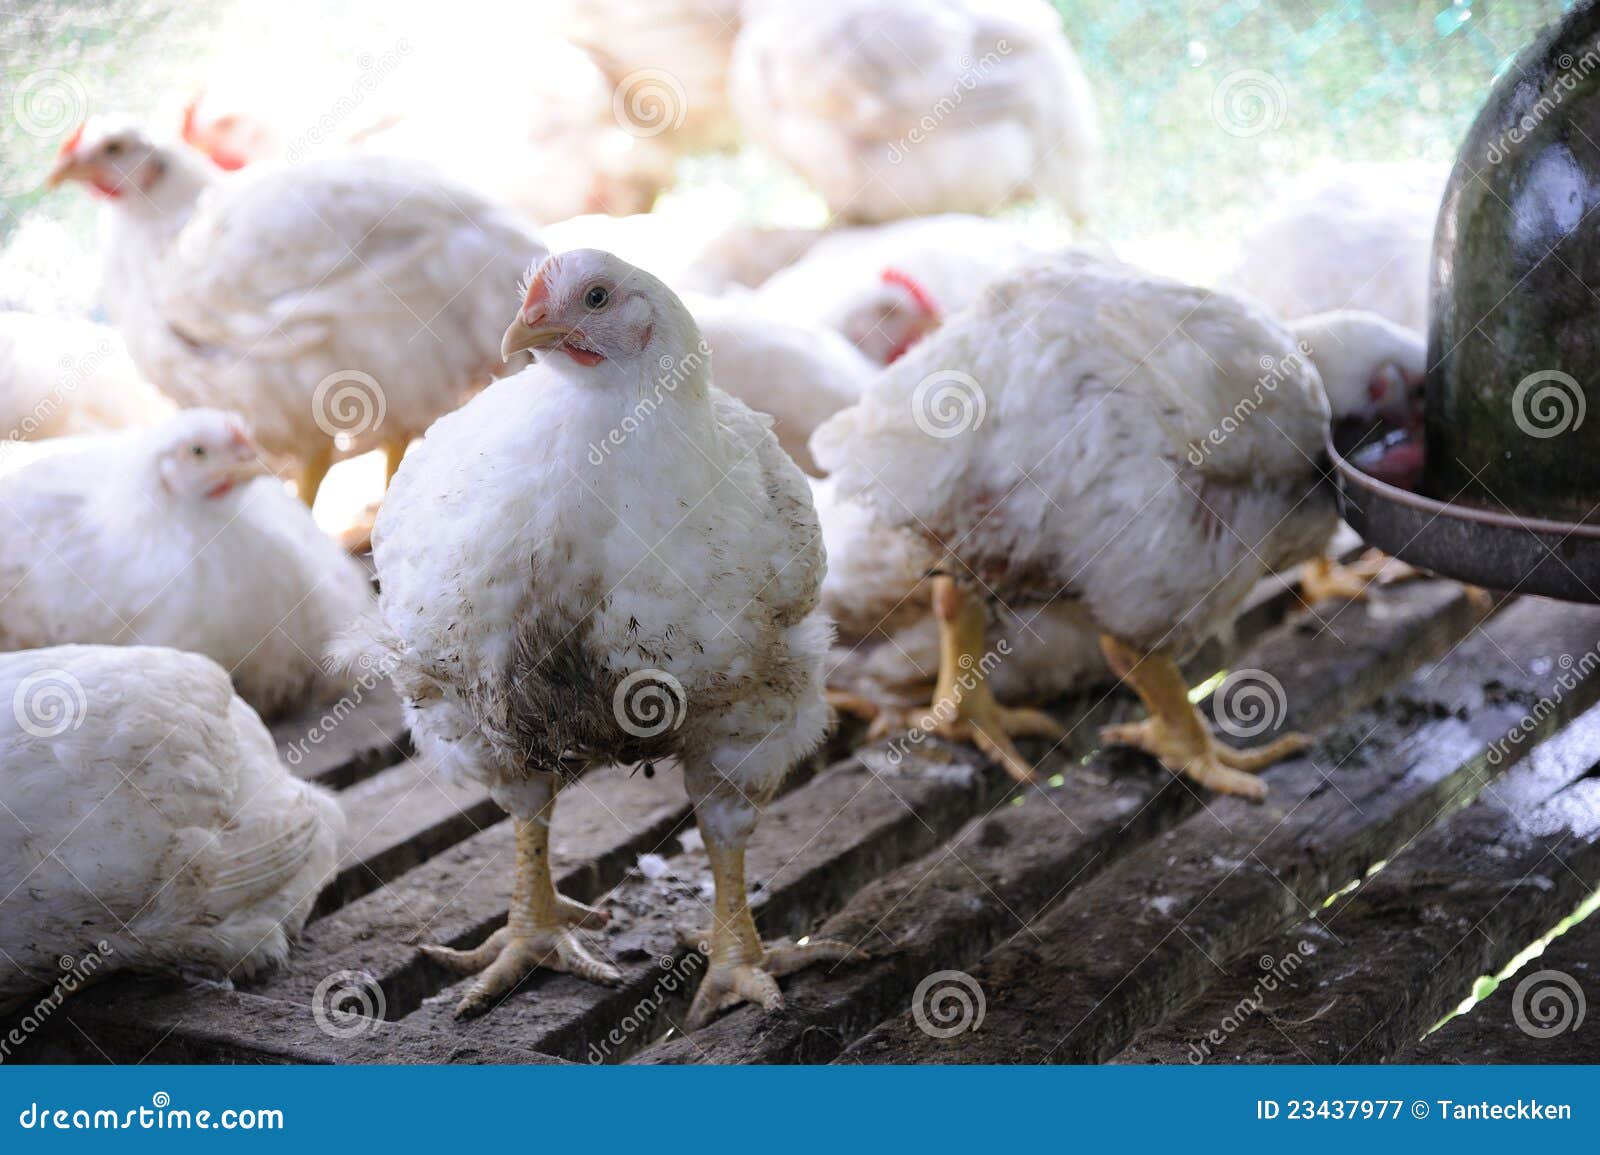 High Resolution Chicken Farm